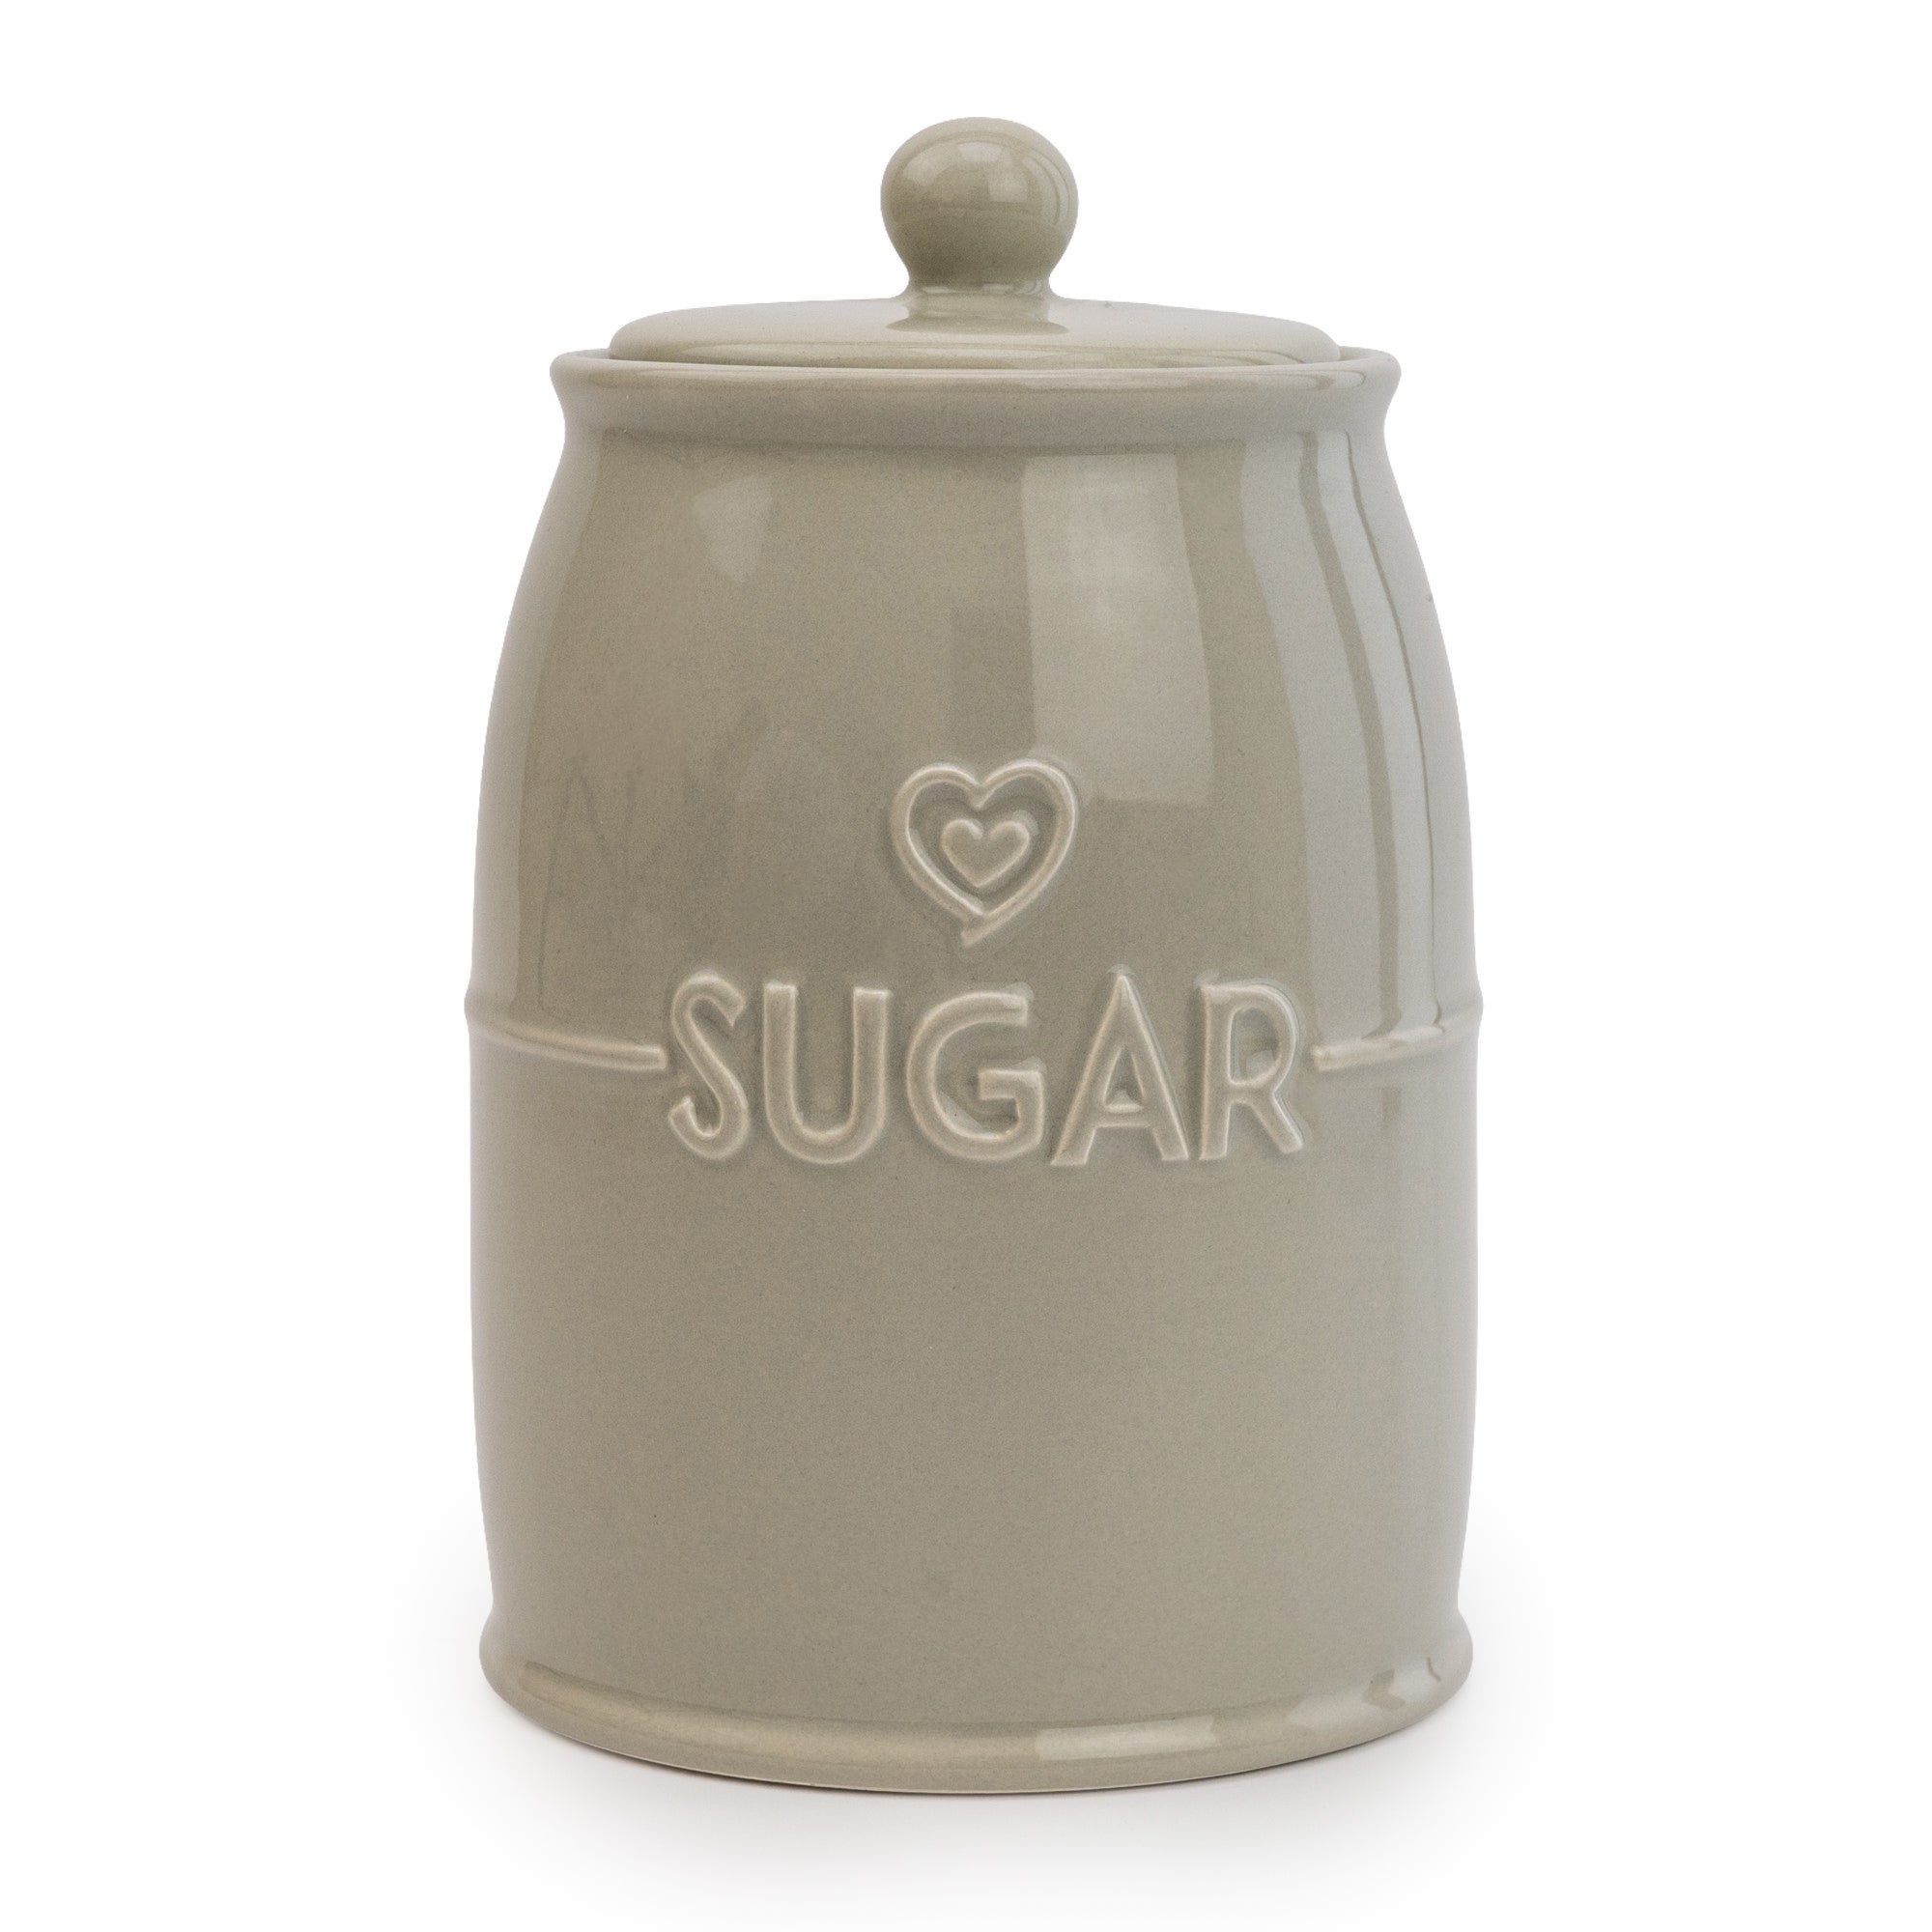 Set of 3 Tea Coffee Sugar Ceramic Canisters - Heart